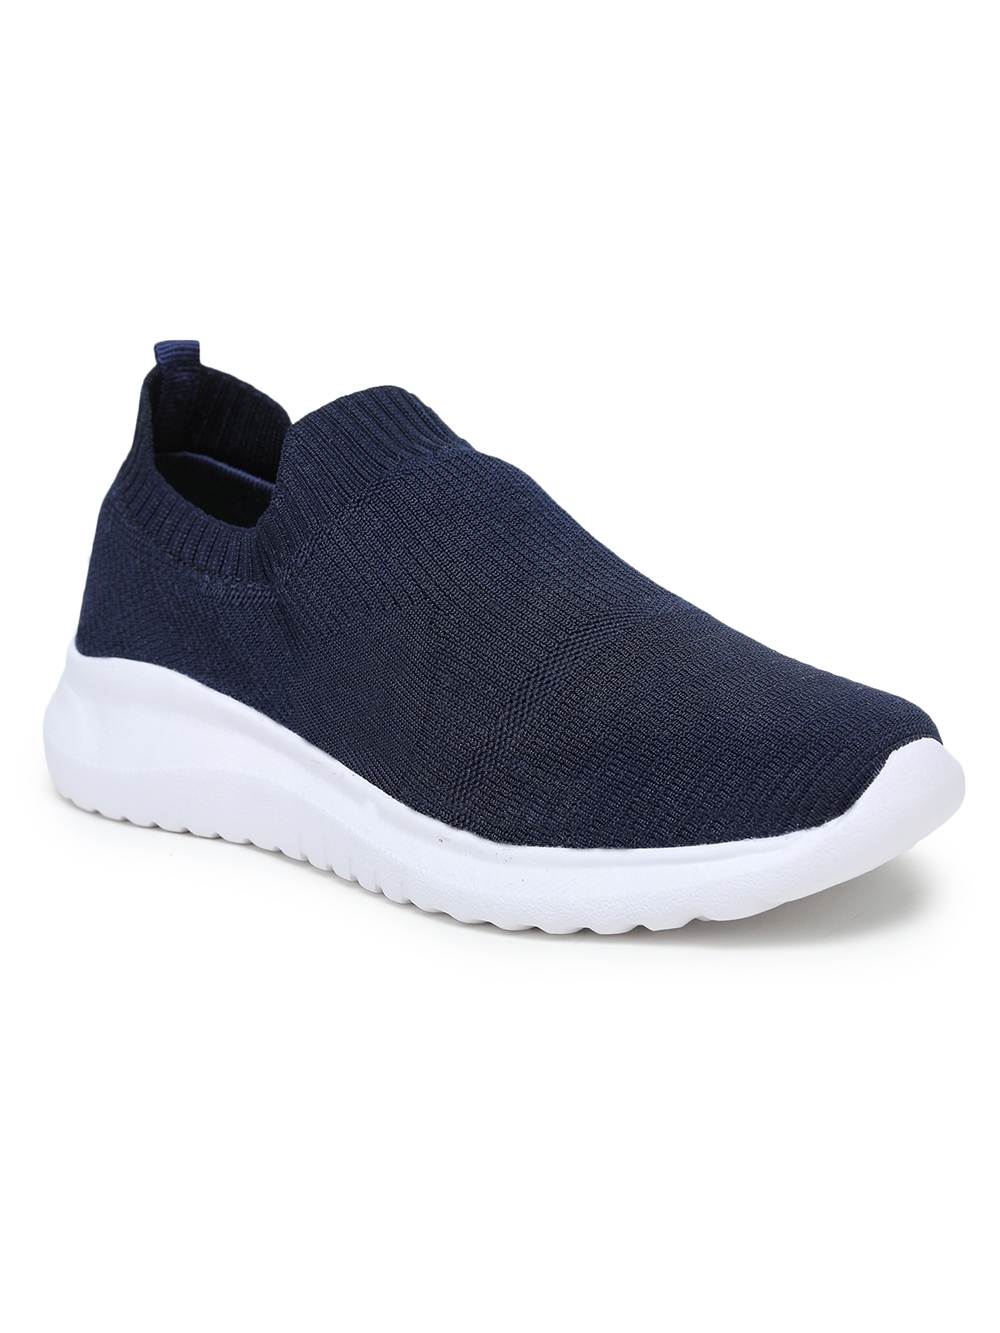 Buy ZAYDN Running Shoes For Men (Navy, Blue) - ZAYDN | Fynd - Online ...